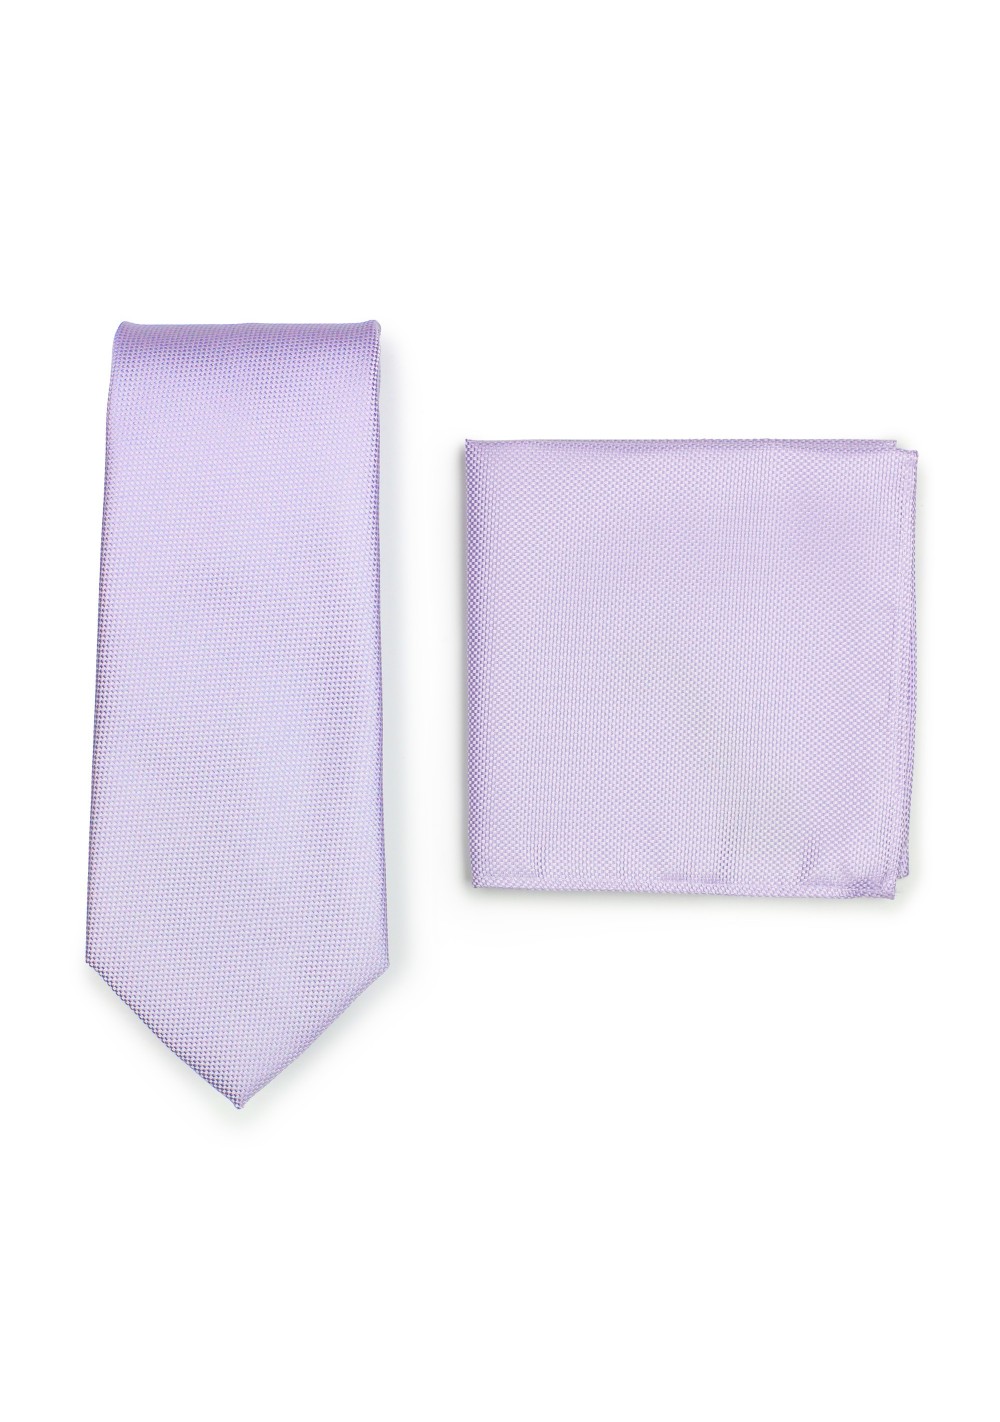 Lavender Tie Set in Matte Finish